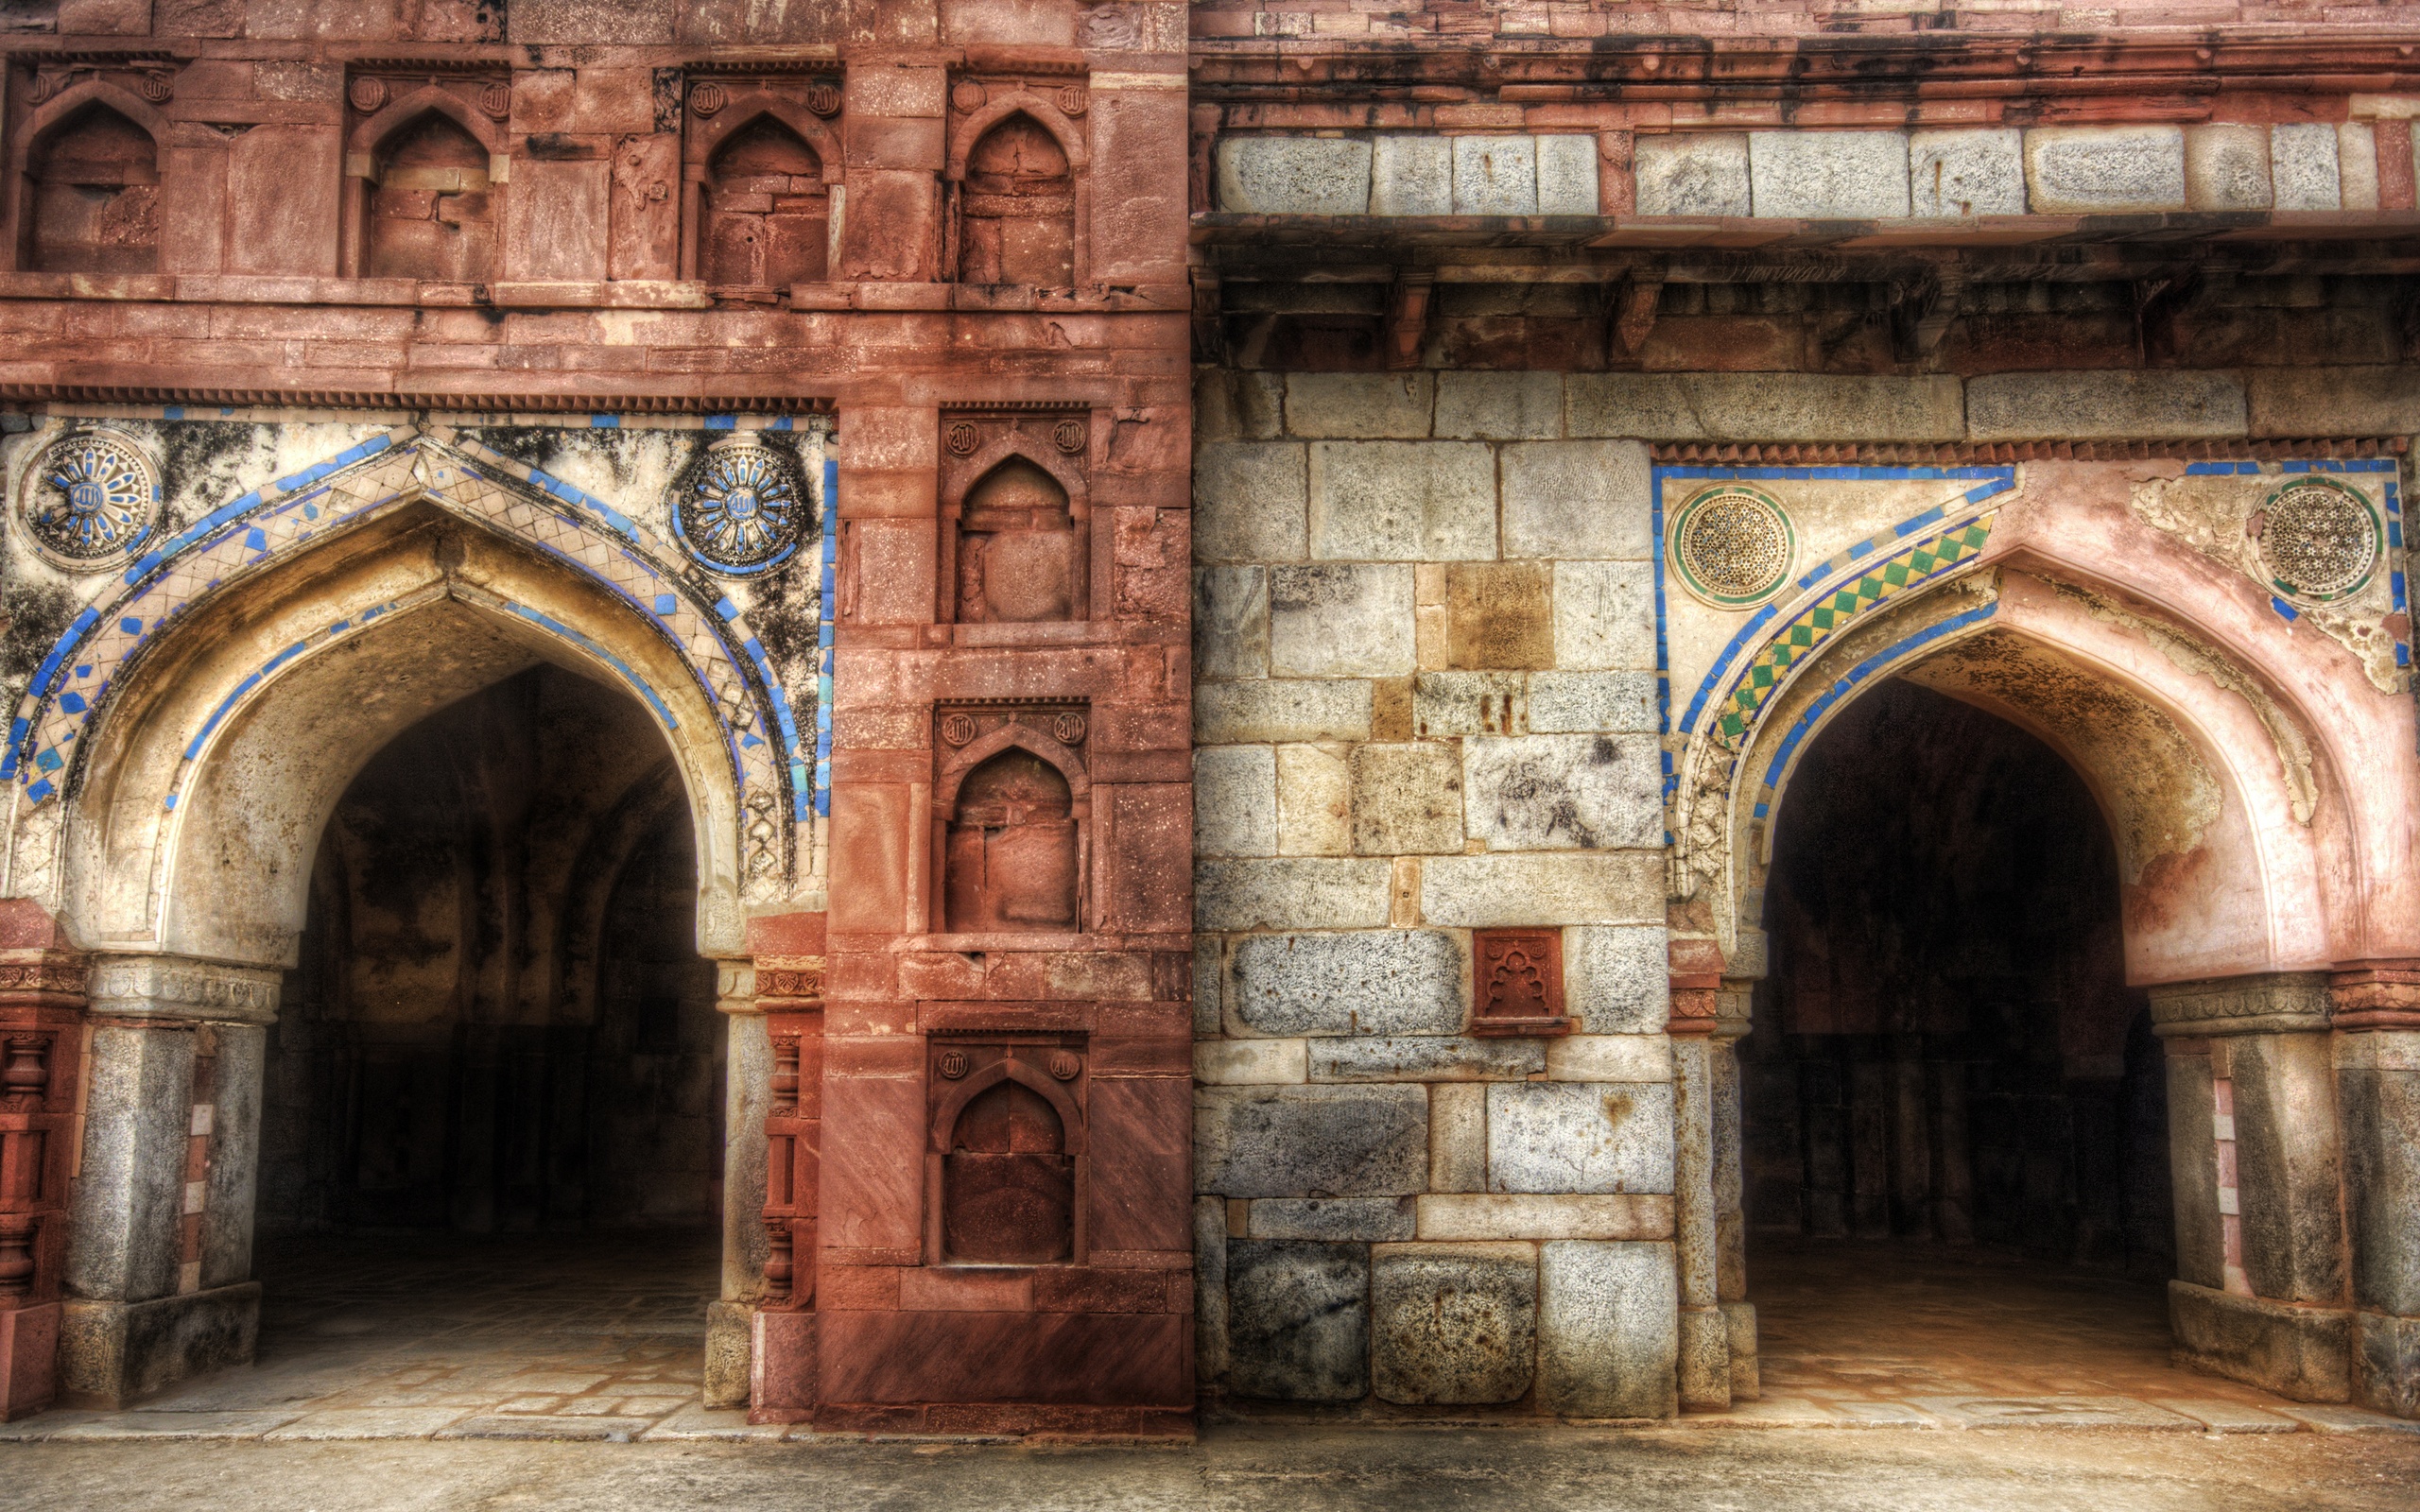 Humayun's Tomb , HD Wallpaper & Backgrounds